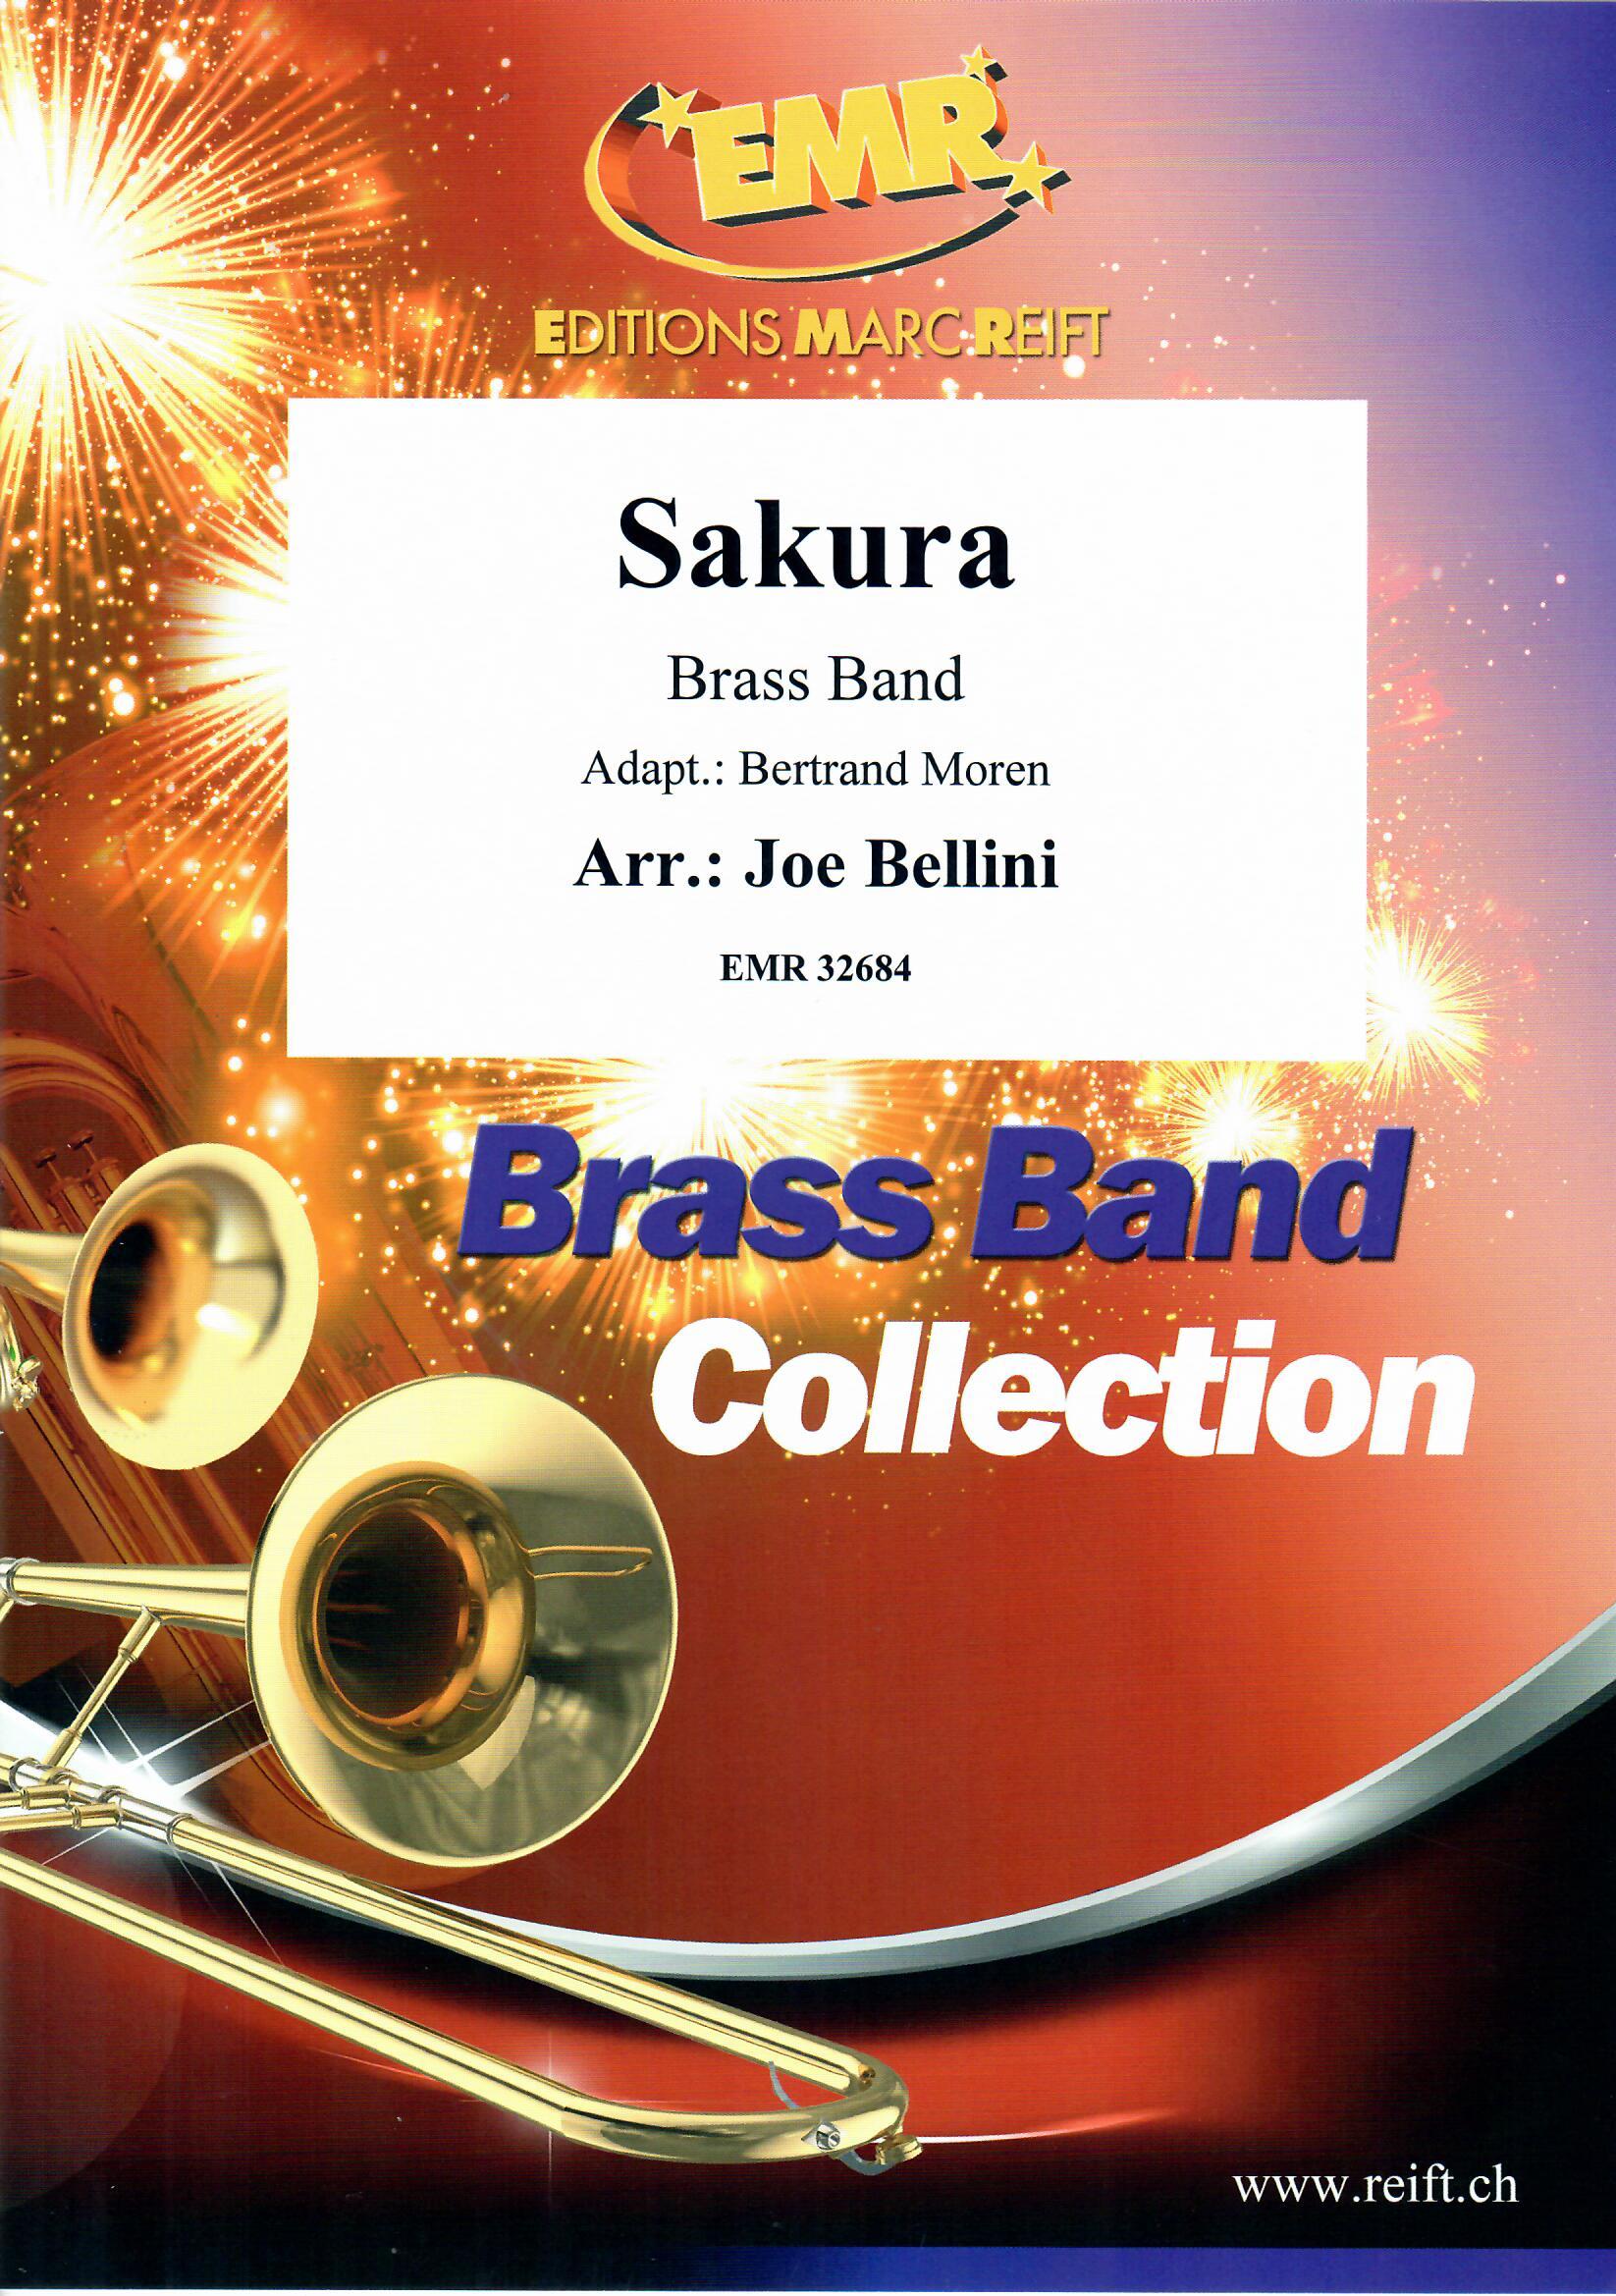 SAKURA - Parts & Score, LIGHT CONCERT MUSIC, NEW & RECENT Publications